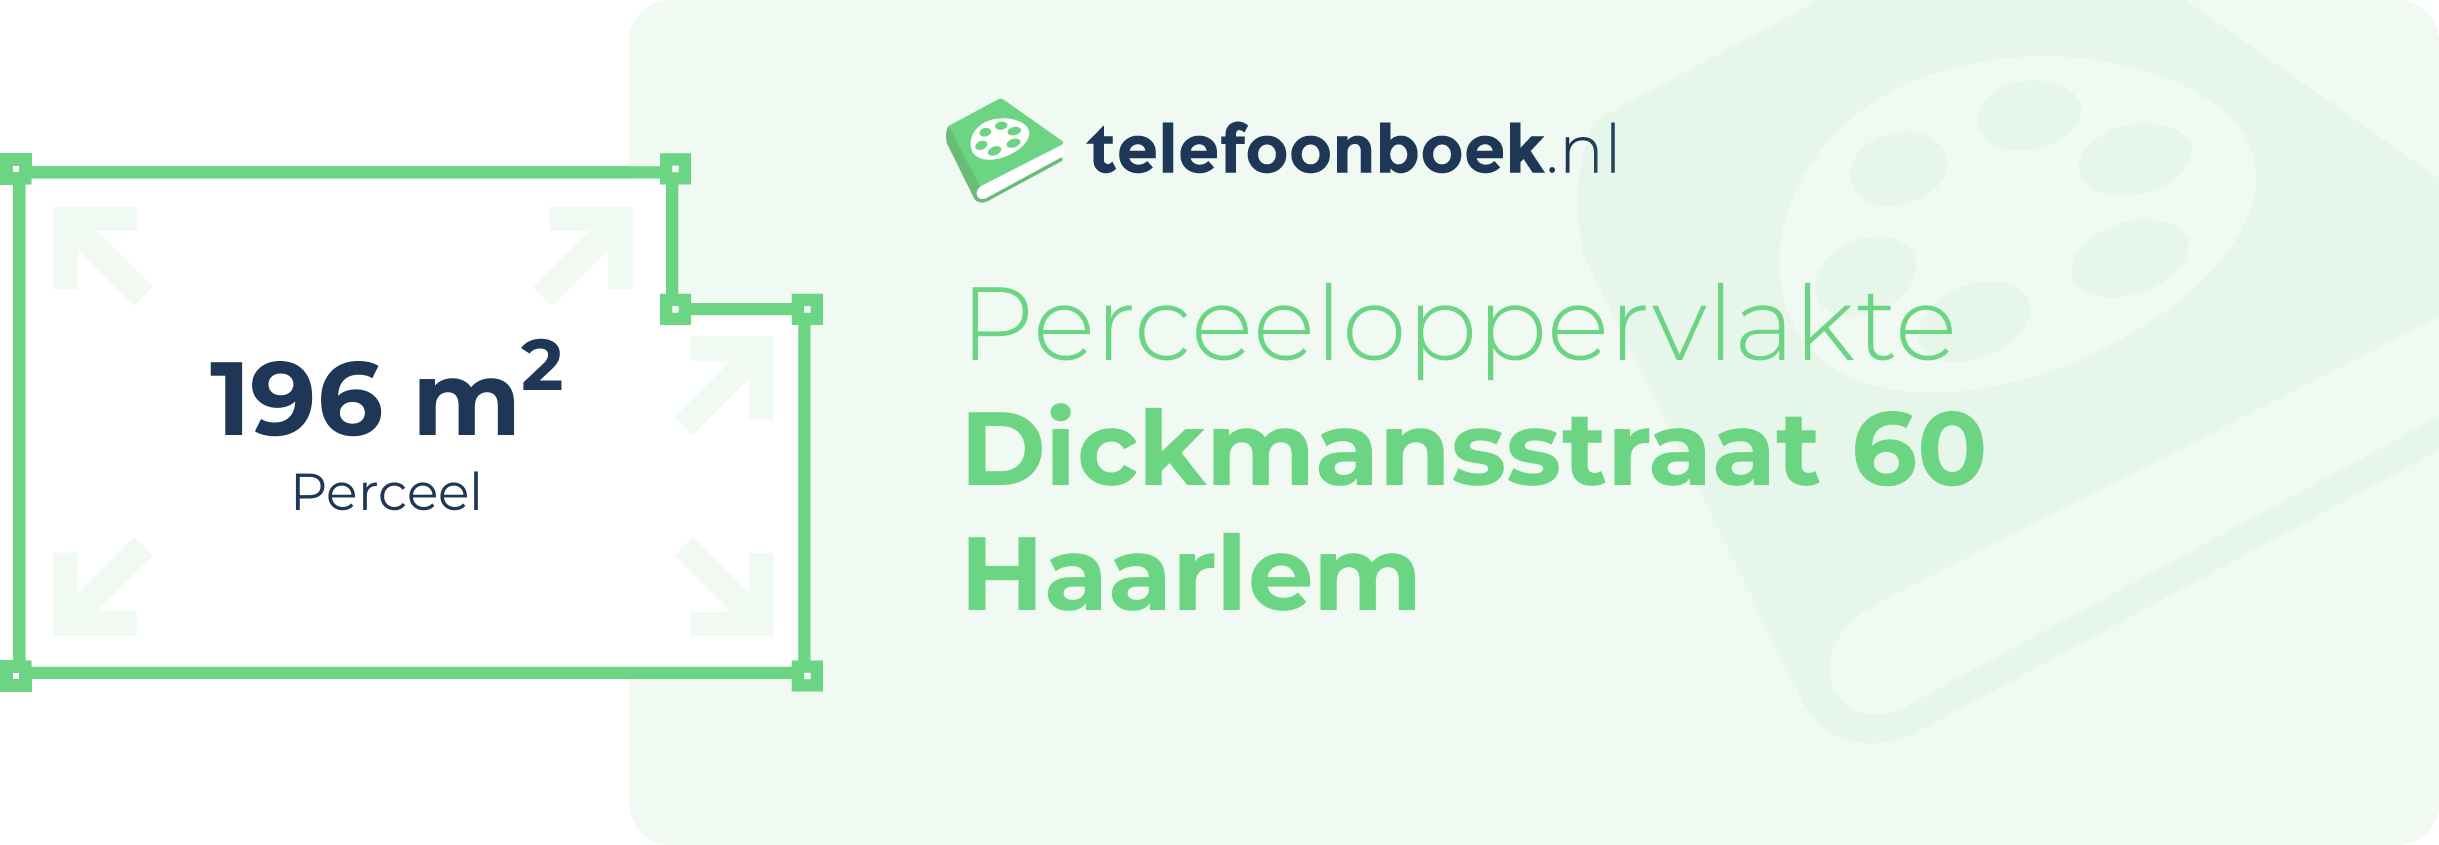 Perceeloppervlakte Dickmansstraat 60 Haarlem